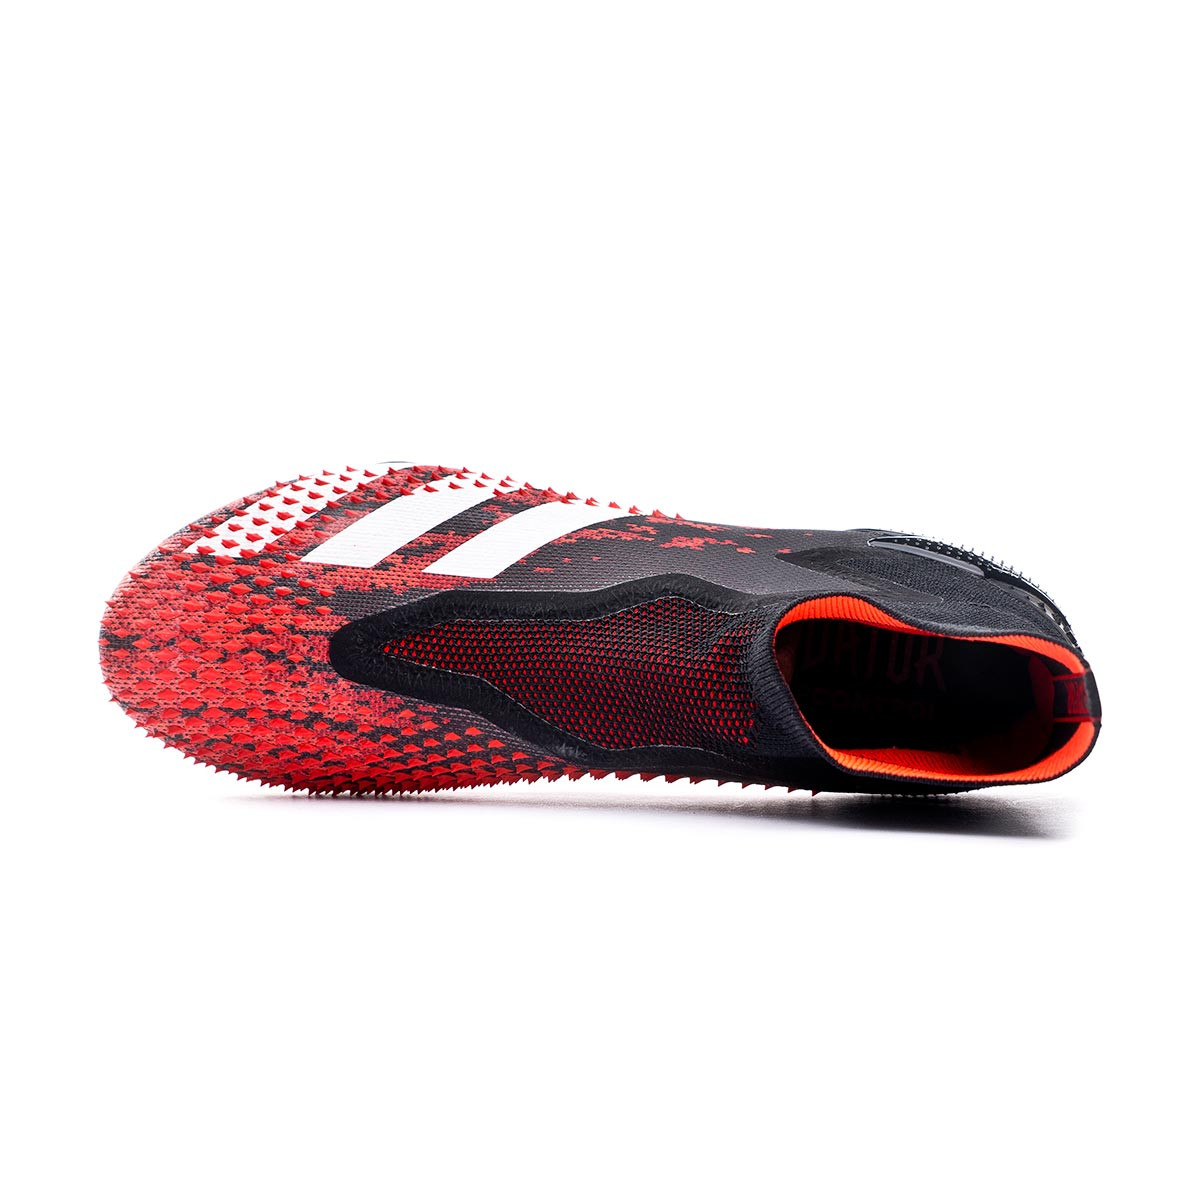 Adidas Predator Mutator 20.1 SG Fu脽ballschuh. Sportcheck